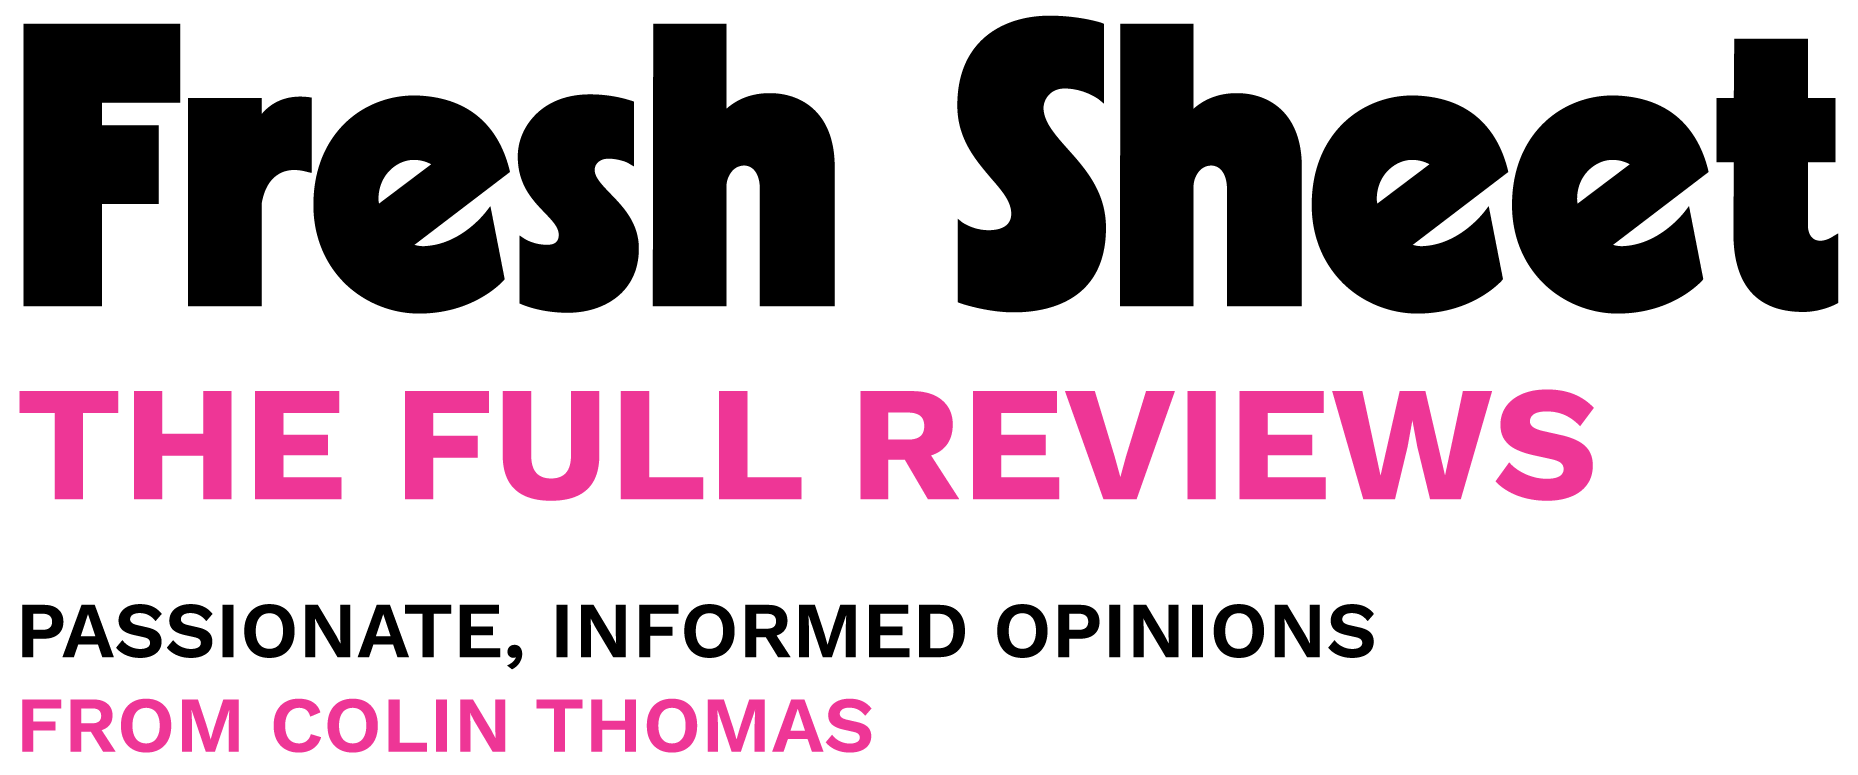 Fresh Sheet Full Reviews logo